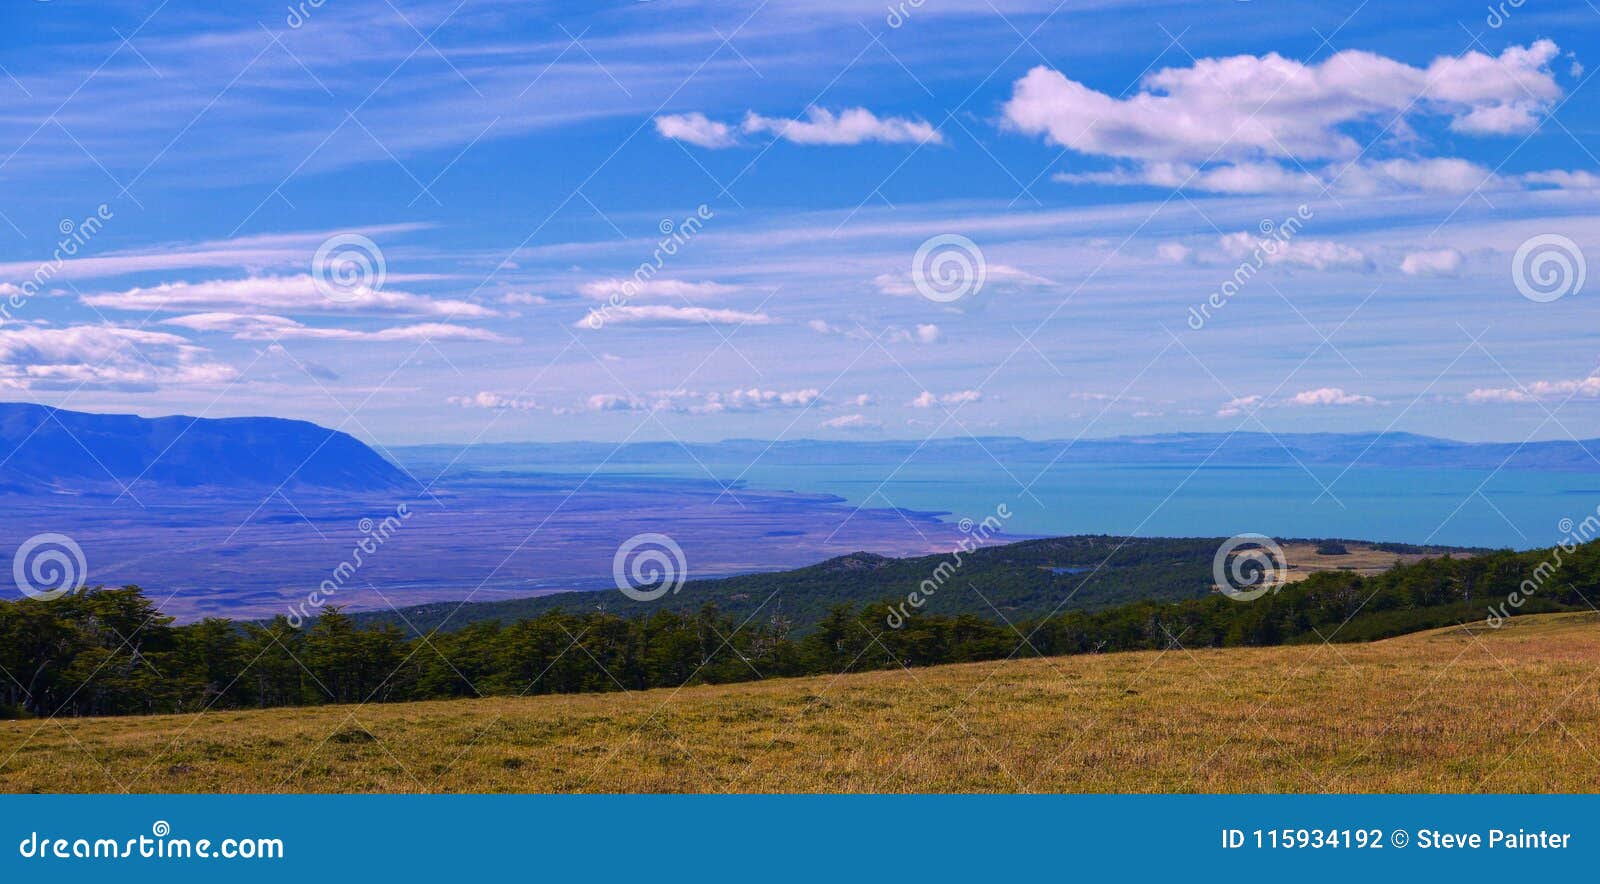 blue skies, horizon and lago in patagonia